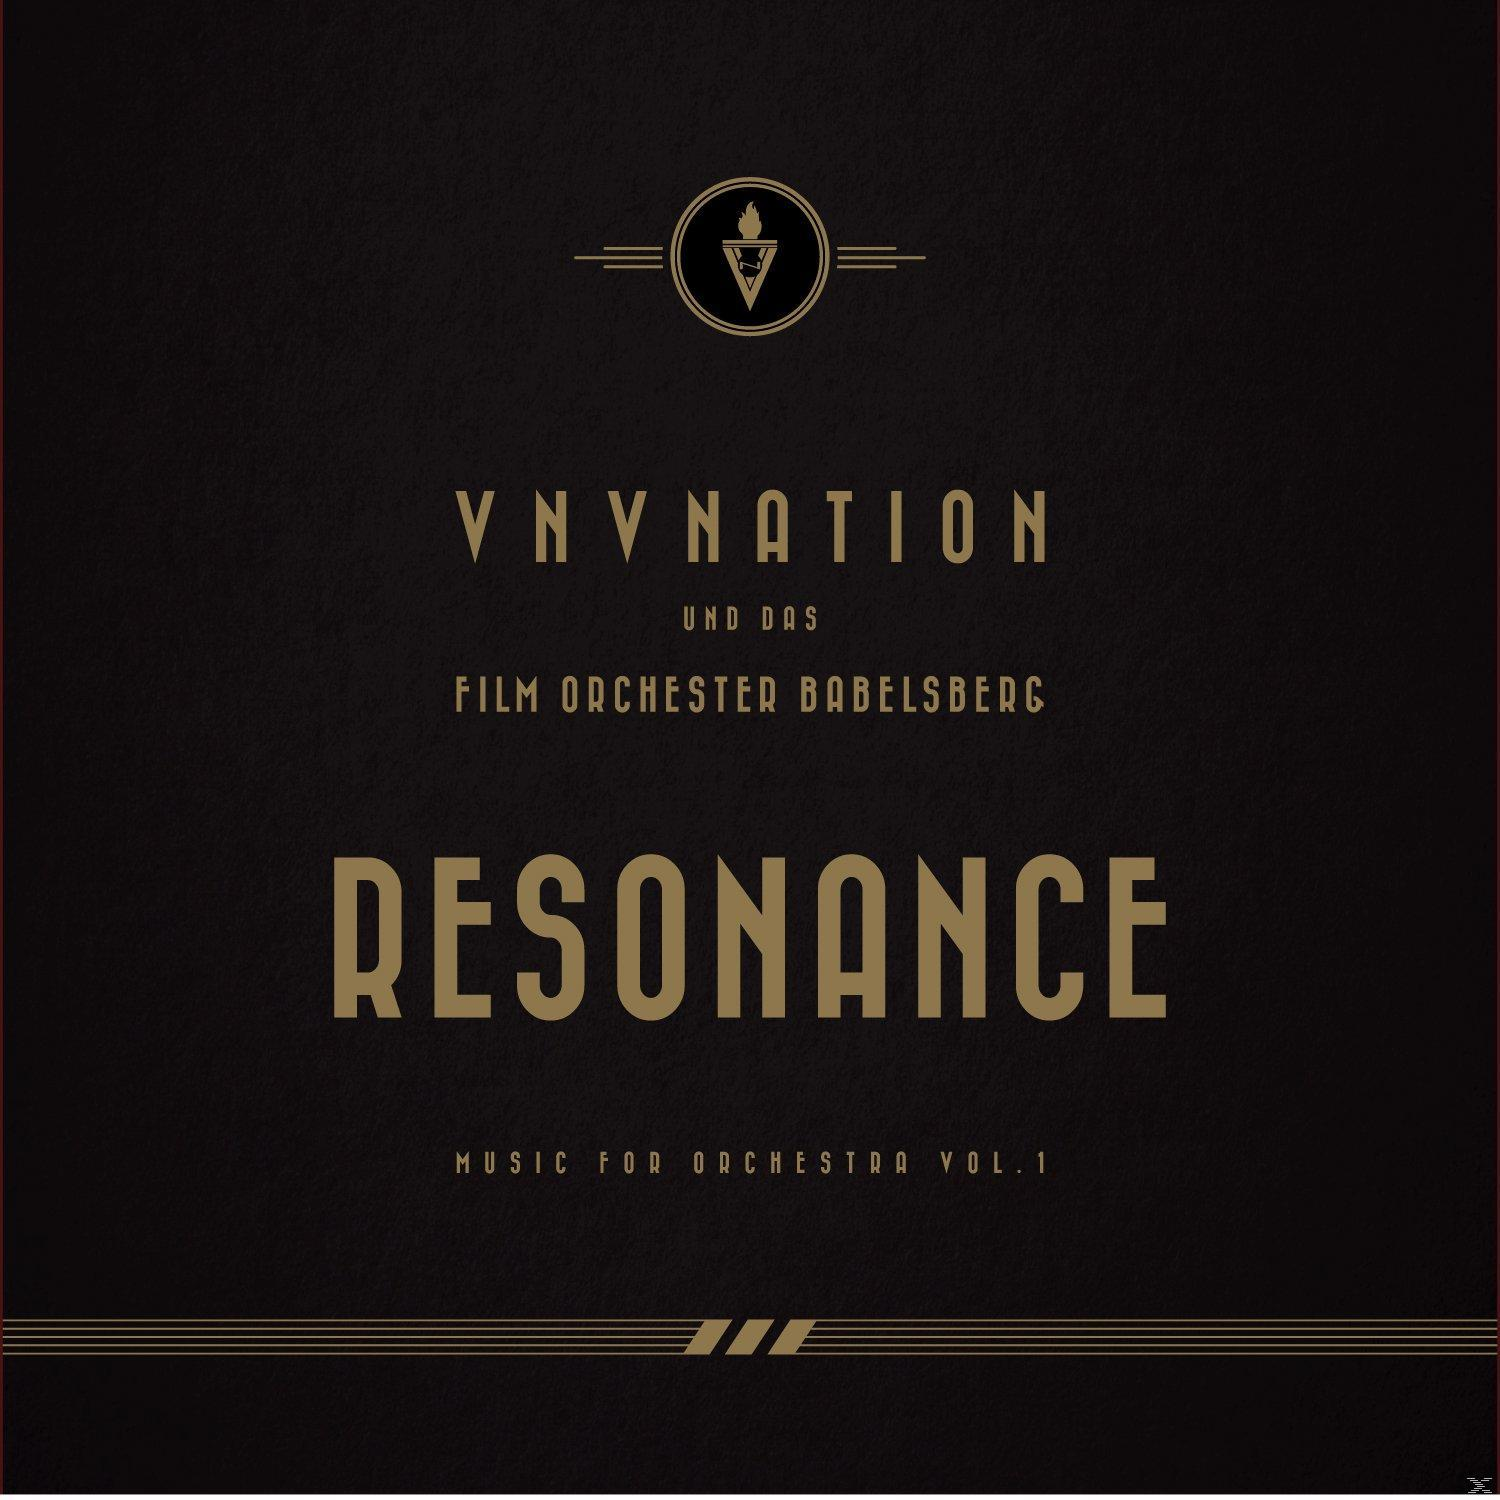 Nation - Resonance (With Vnv The - Film Orchestra) Babelsberg (CD)